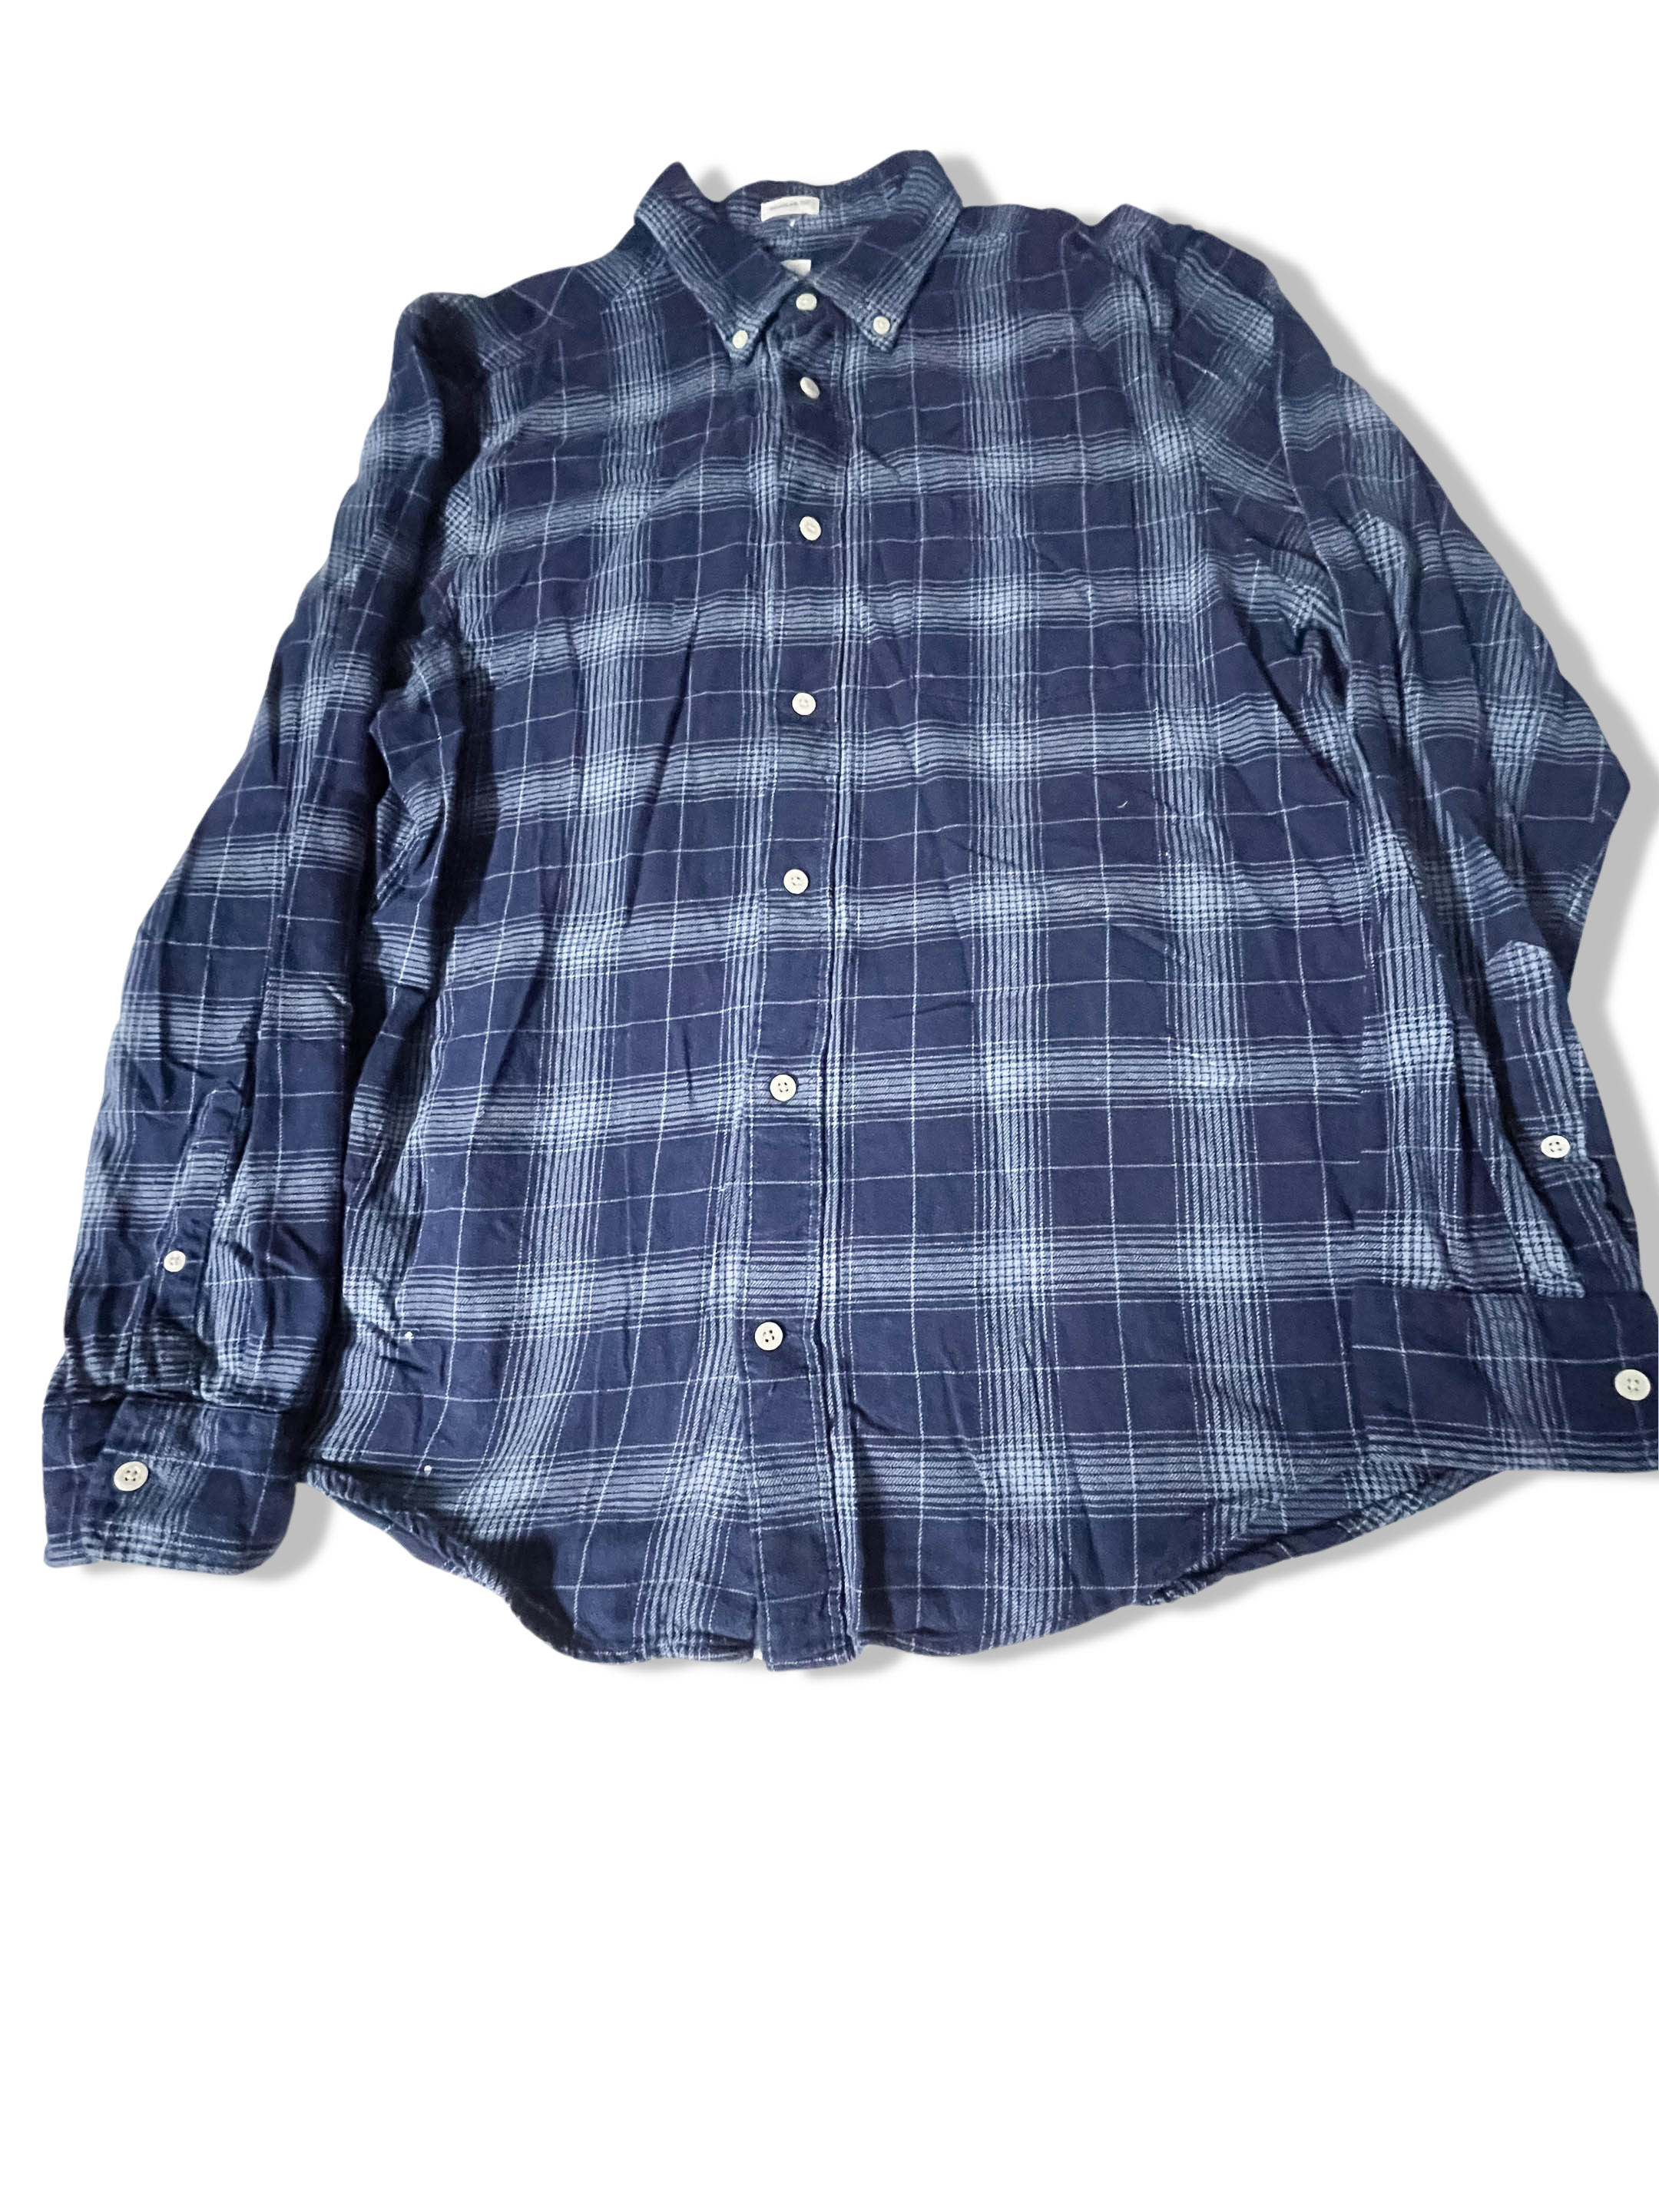 Vintage mens John Lewis regular fit blue checkered large long sleeve shirt